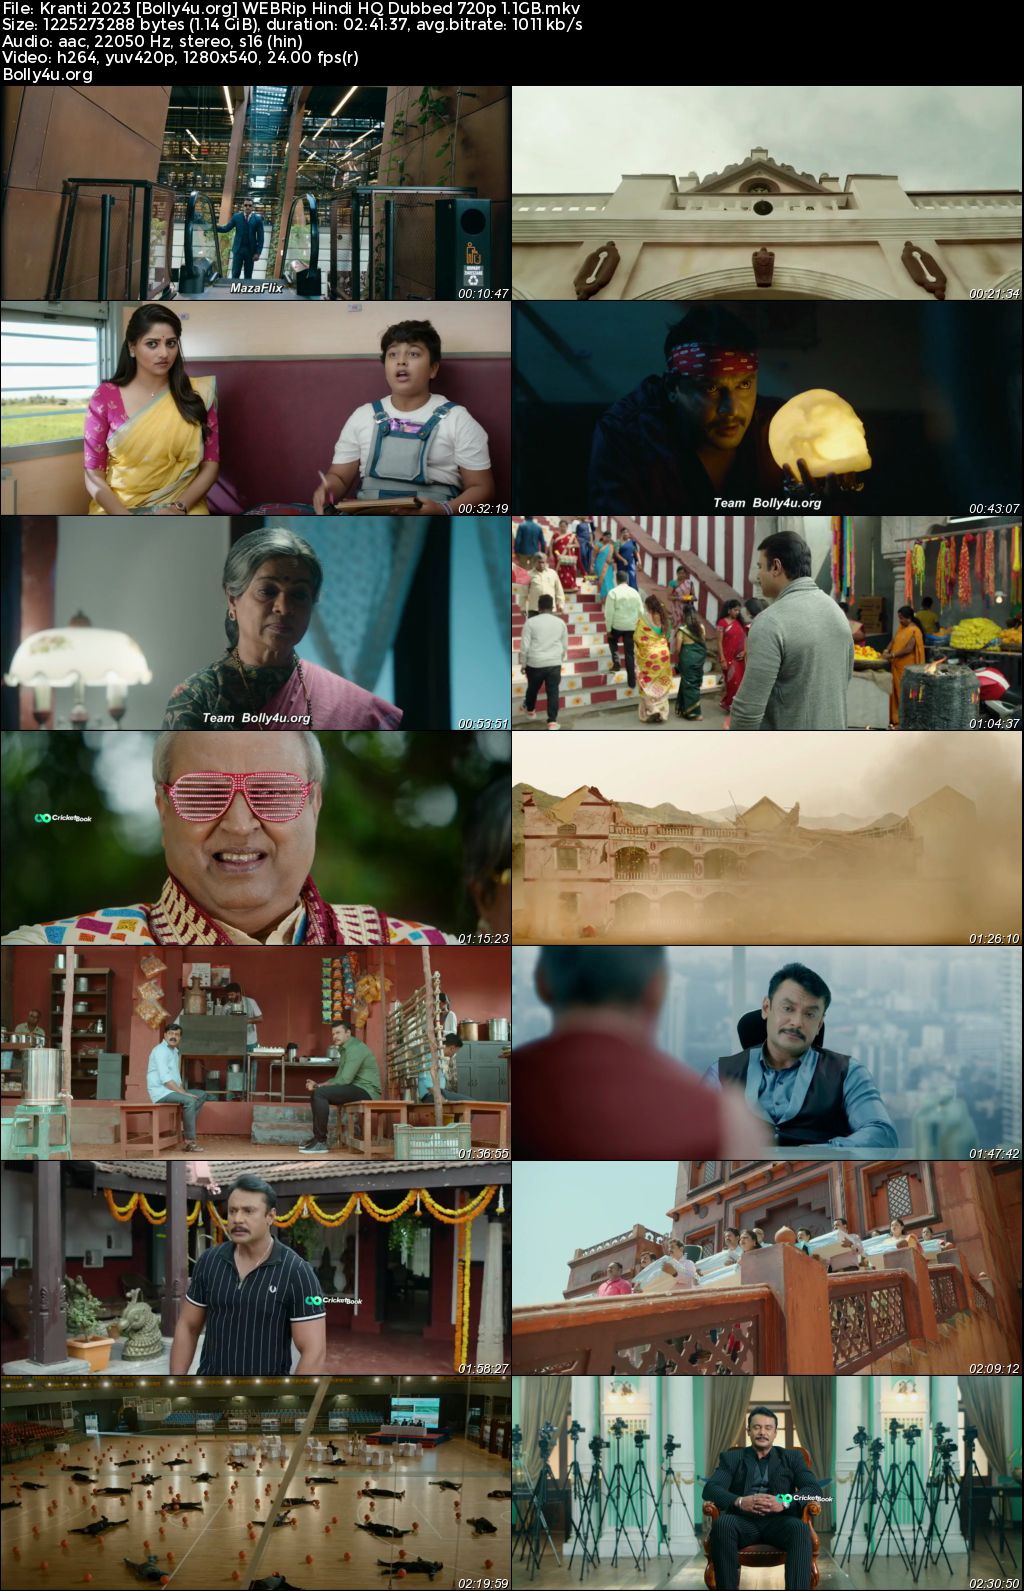 Kranti 2023 WEBRip Hindi HQ Dubbed Full Movie Download 1080p 720p 480p